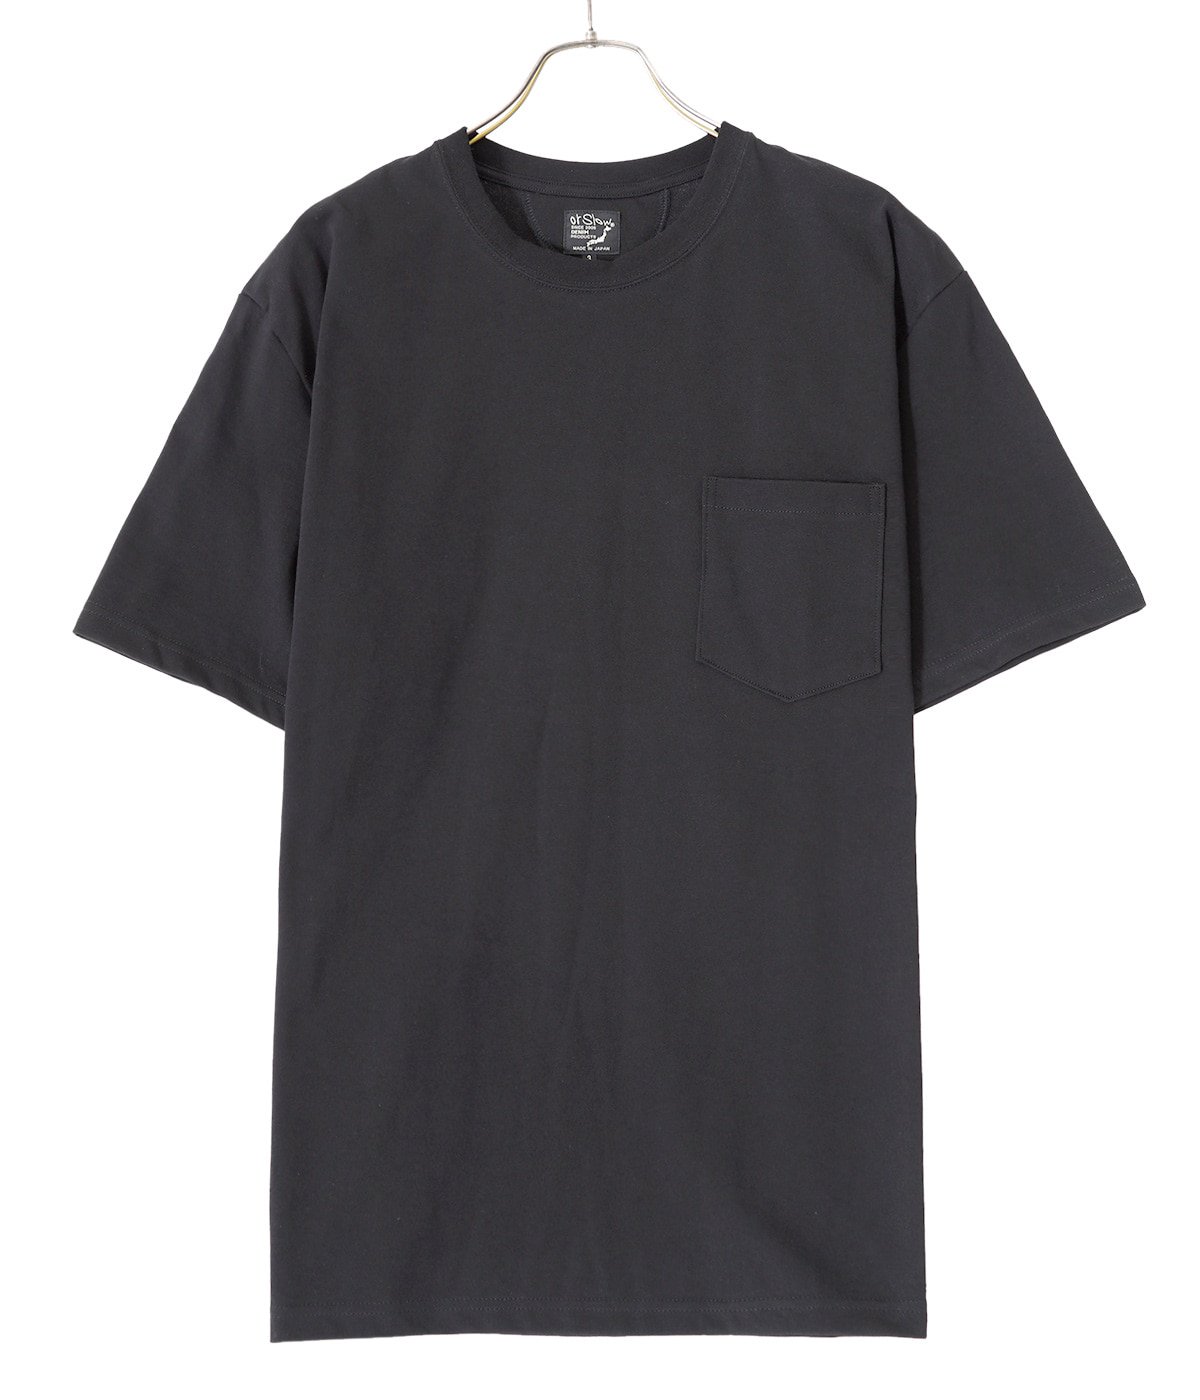 Pocket T Shirt Orslow オアスロウ トップス カットソー半袖 Tシャツ メンズ の通販 Arknets アークネッツ 公式通販 正規取扱店